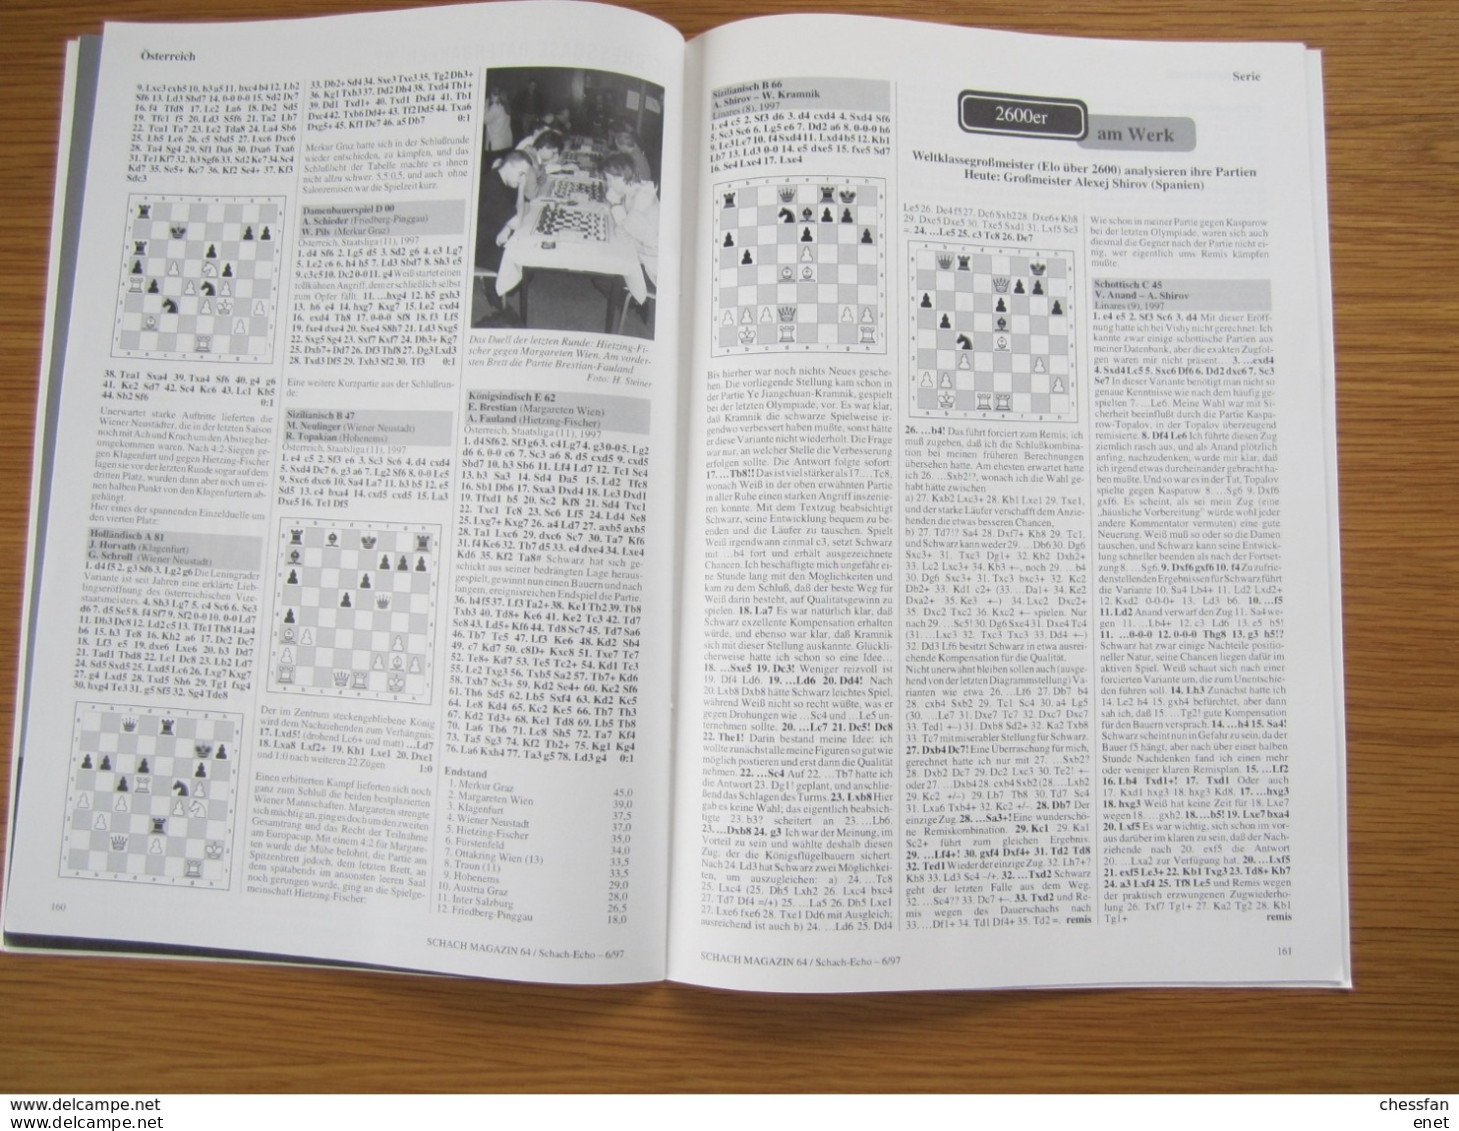 Schach Chess Ajedrez échecs - Schach Magazine - Nr 6 / 1997 - Deportes